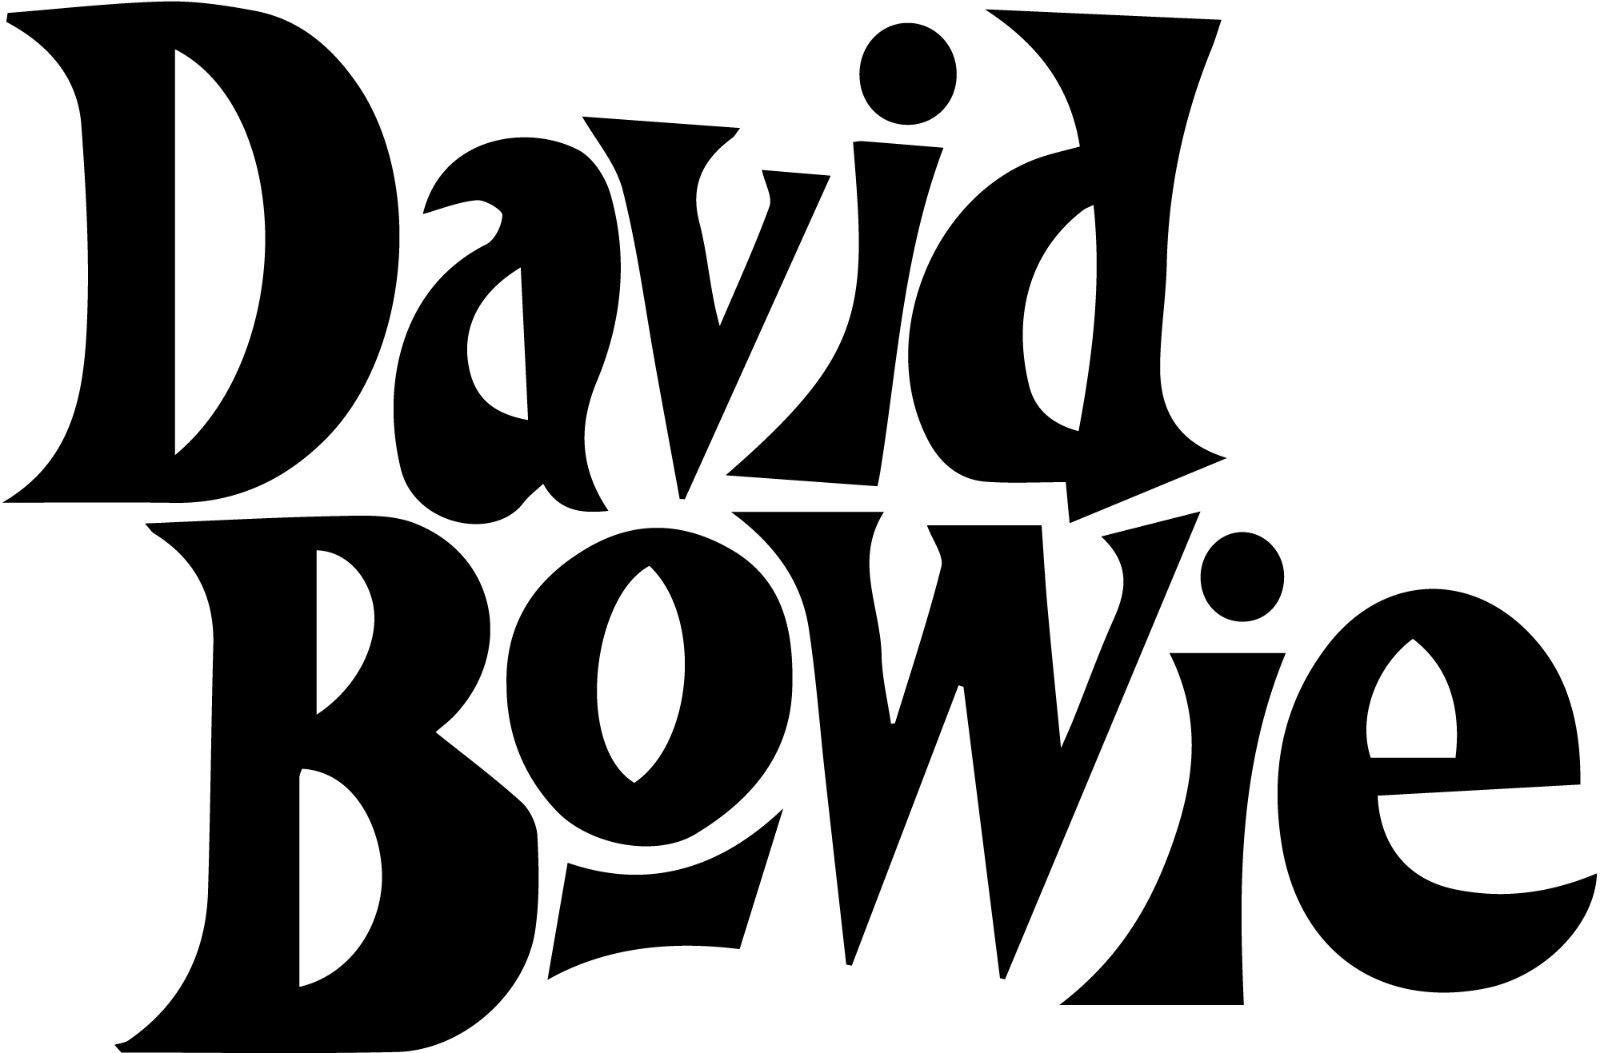 Bowie Logo - David Bowie logo | Prints Tees